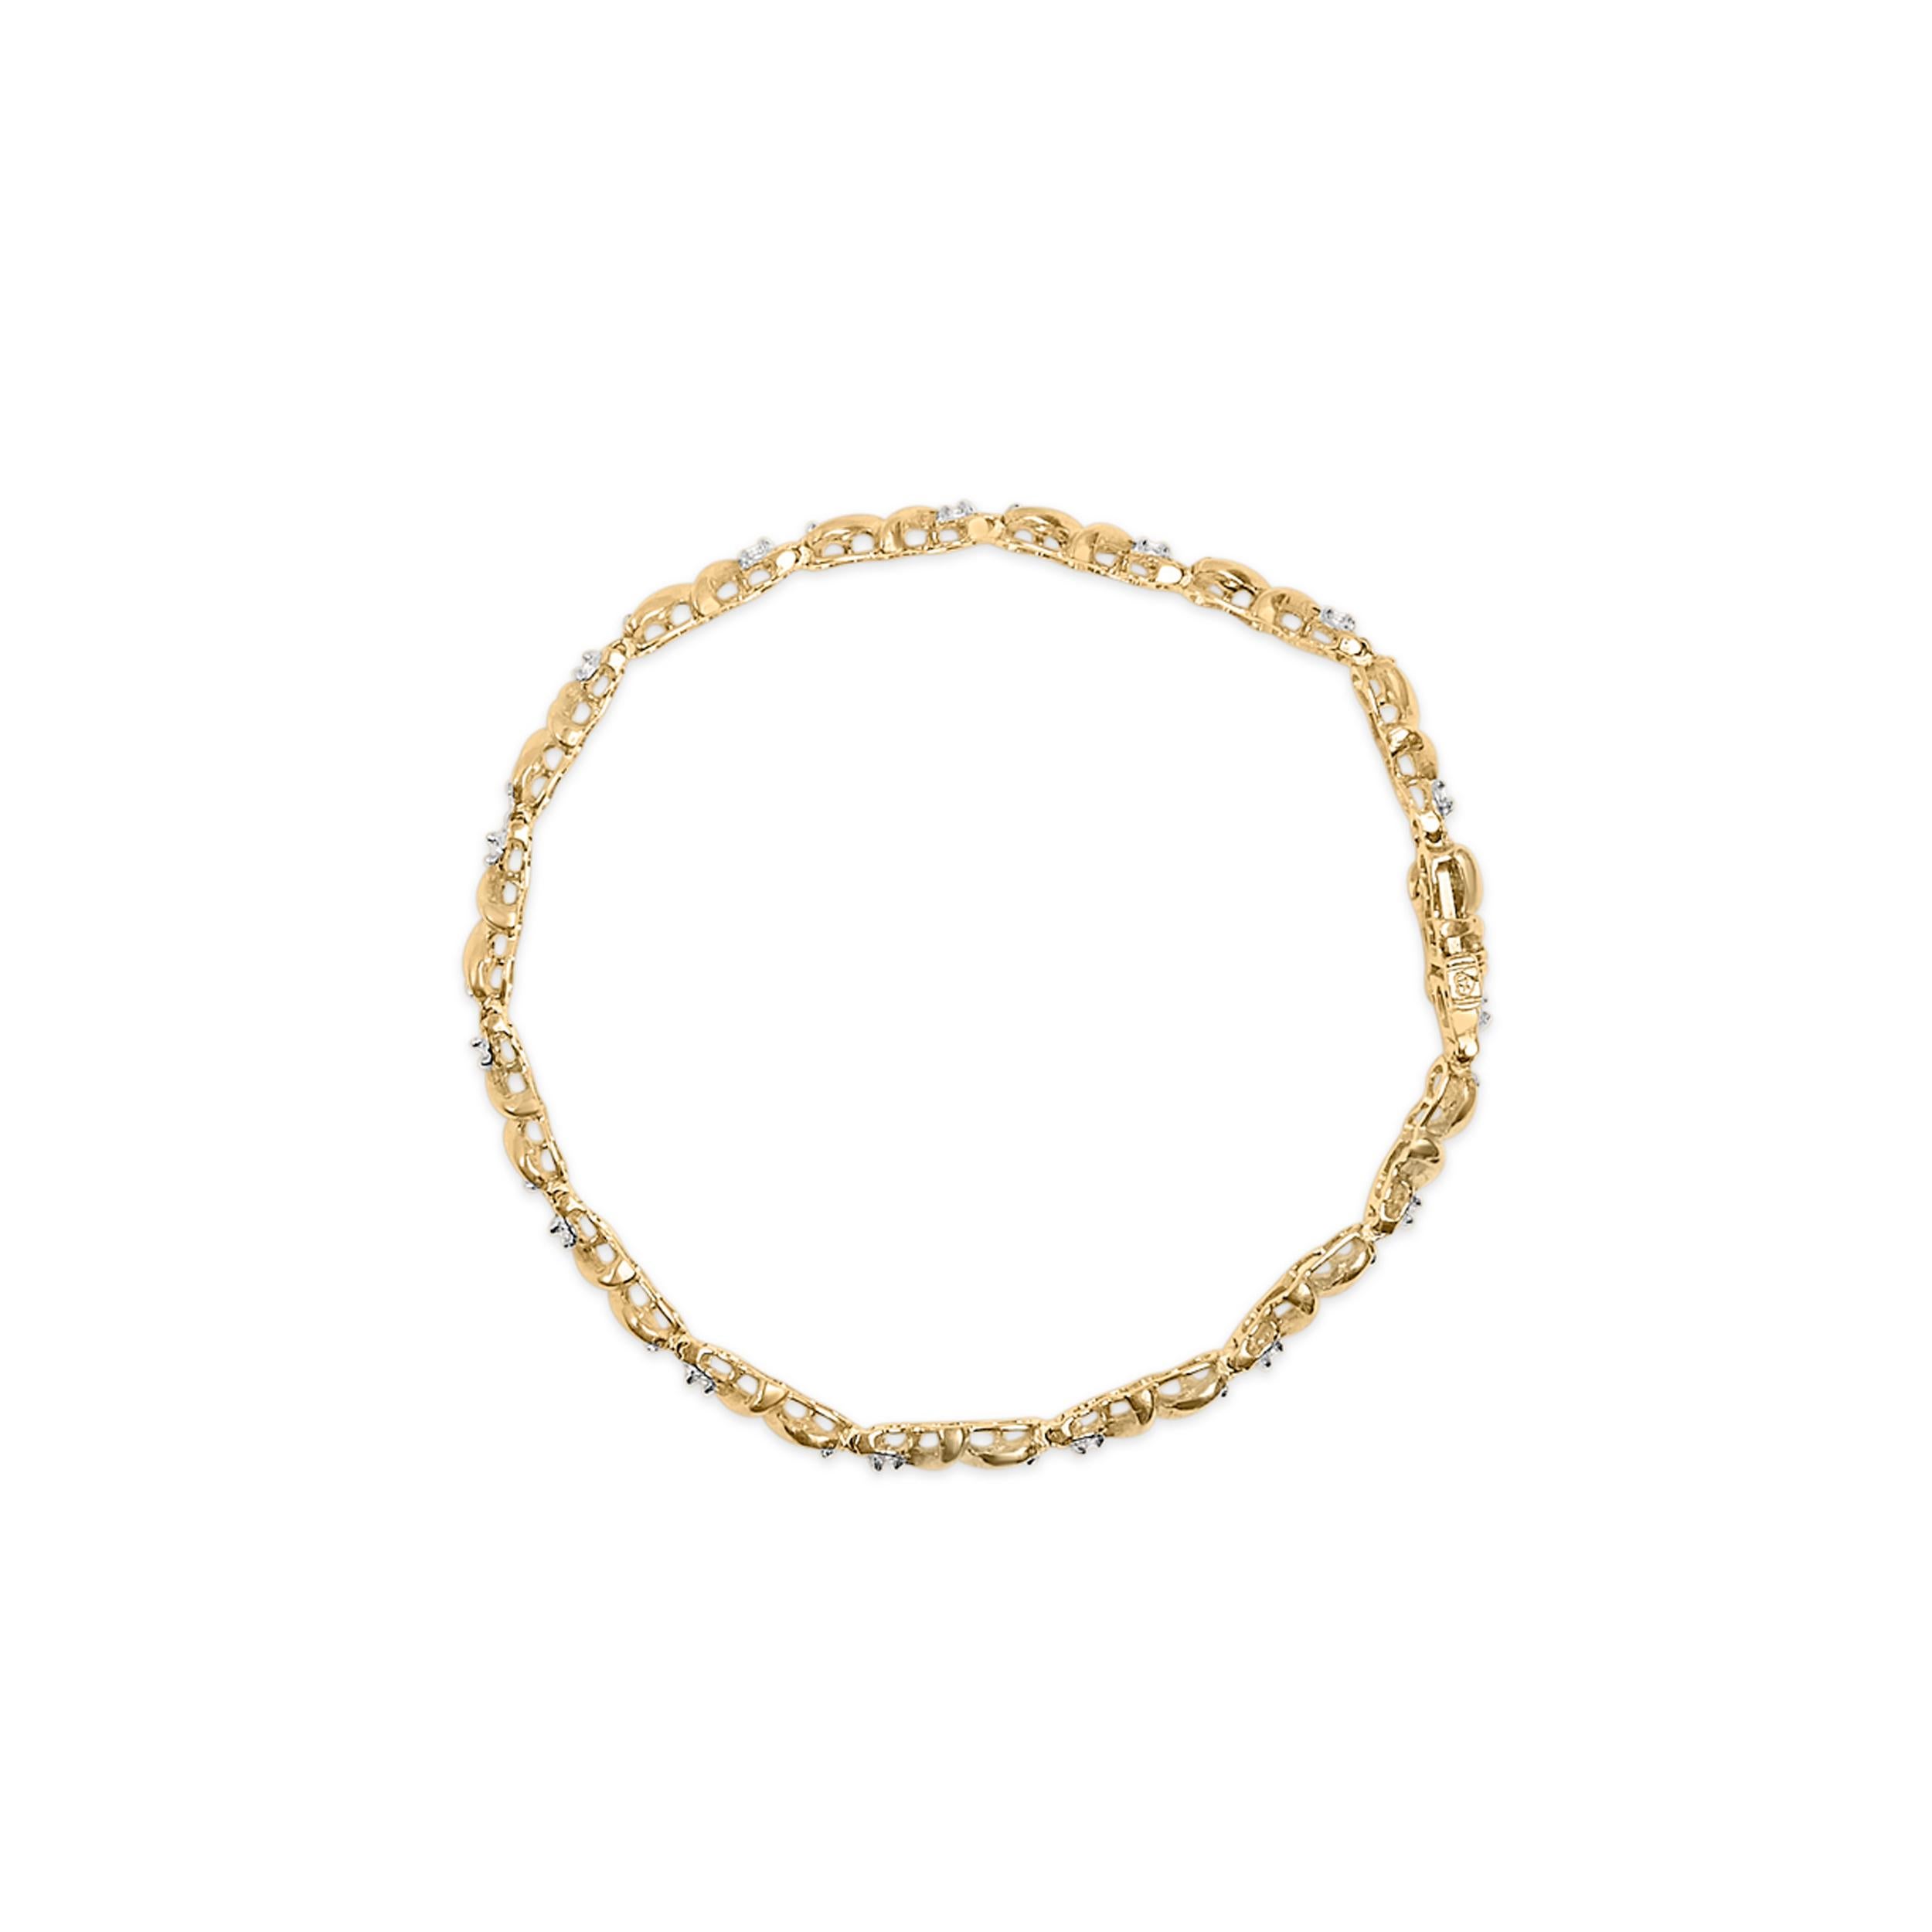 1 carat diamond 10k gold tennis bracelet